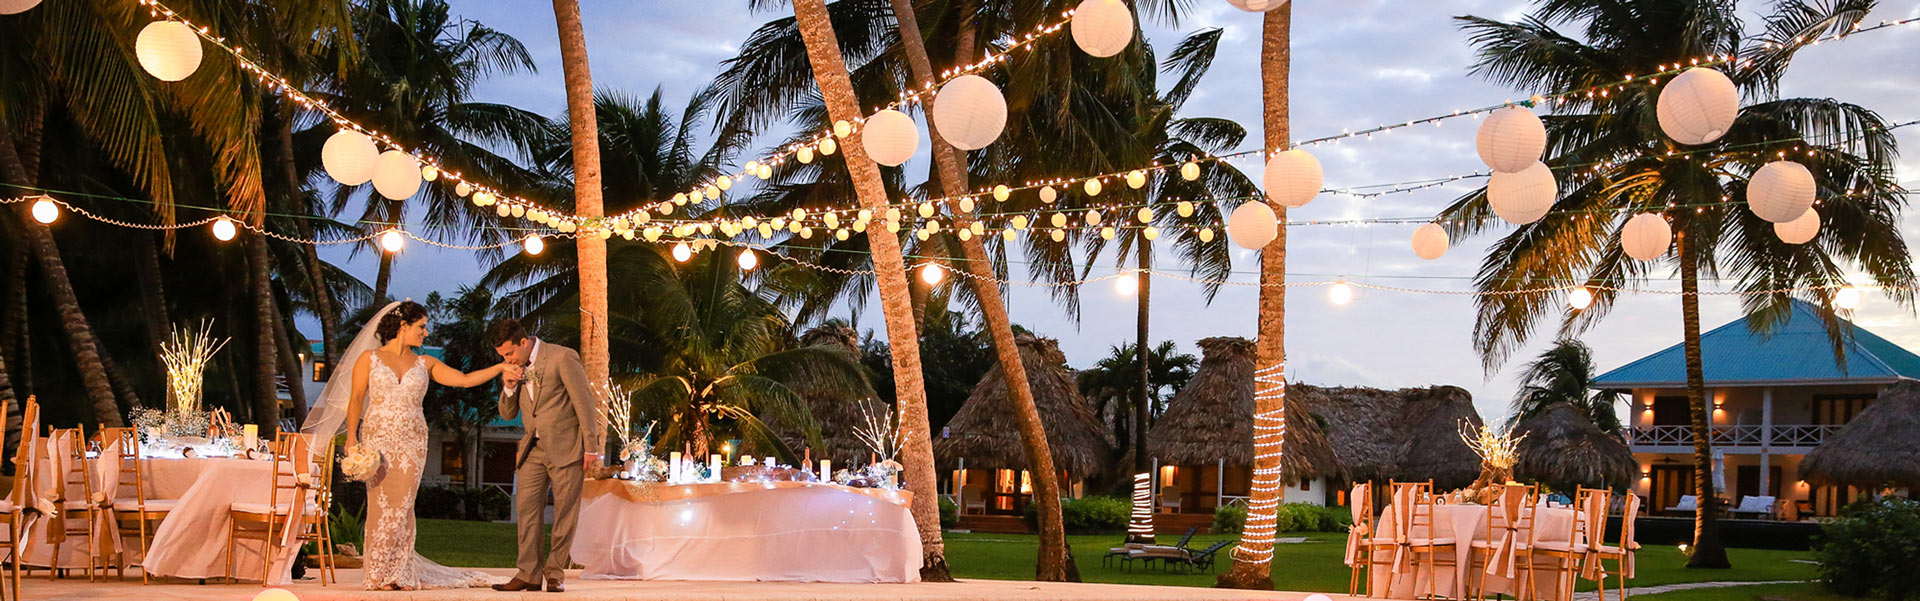 Belize destination wedding at Victoria House Resort & Spa